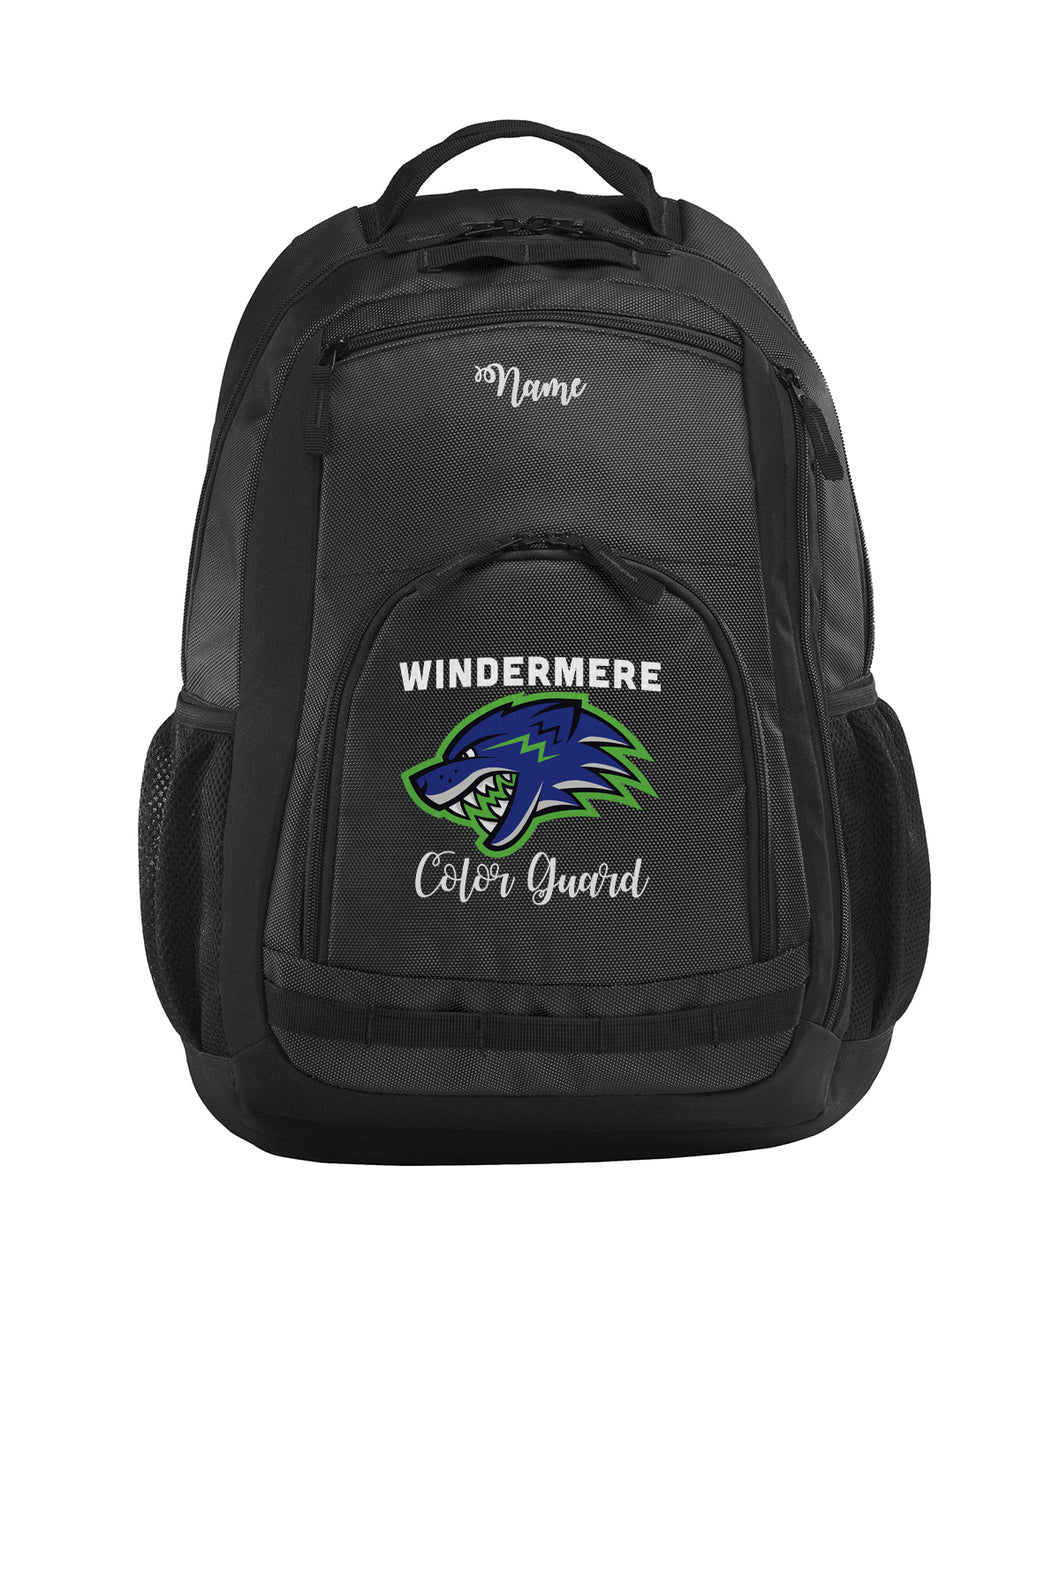 Windermere Xtreme Backpack w/ Logo & Name Embroidery